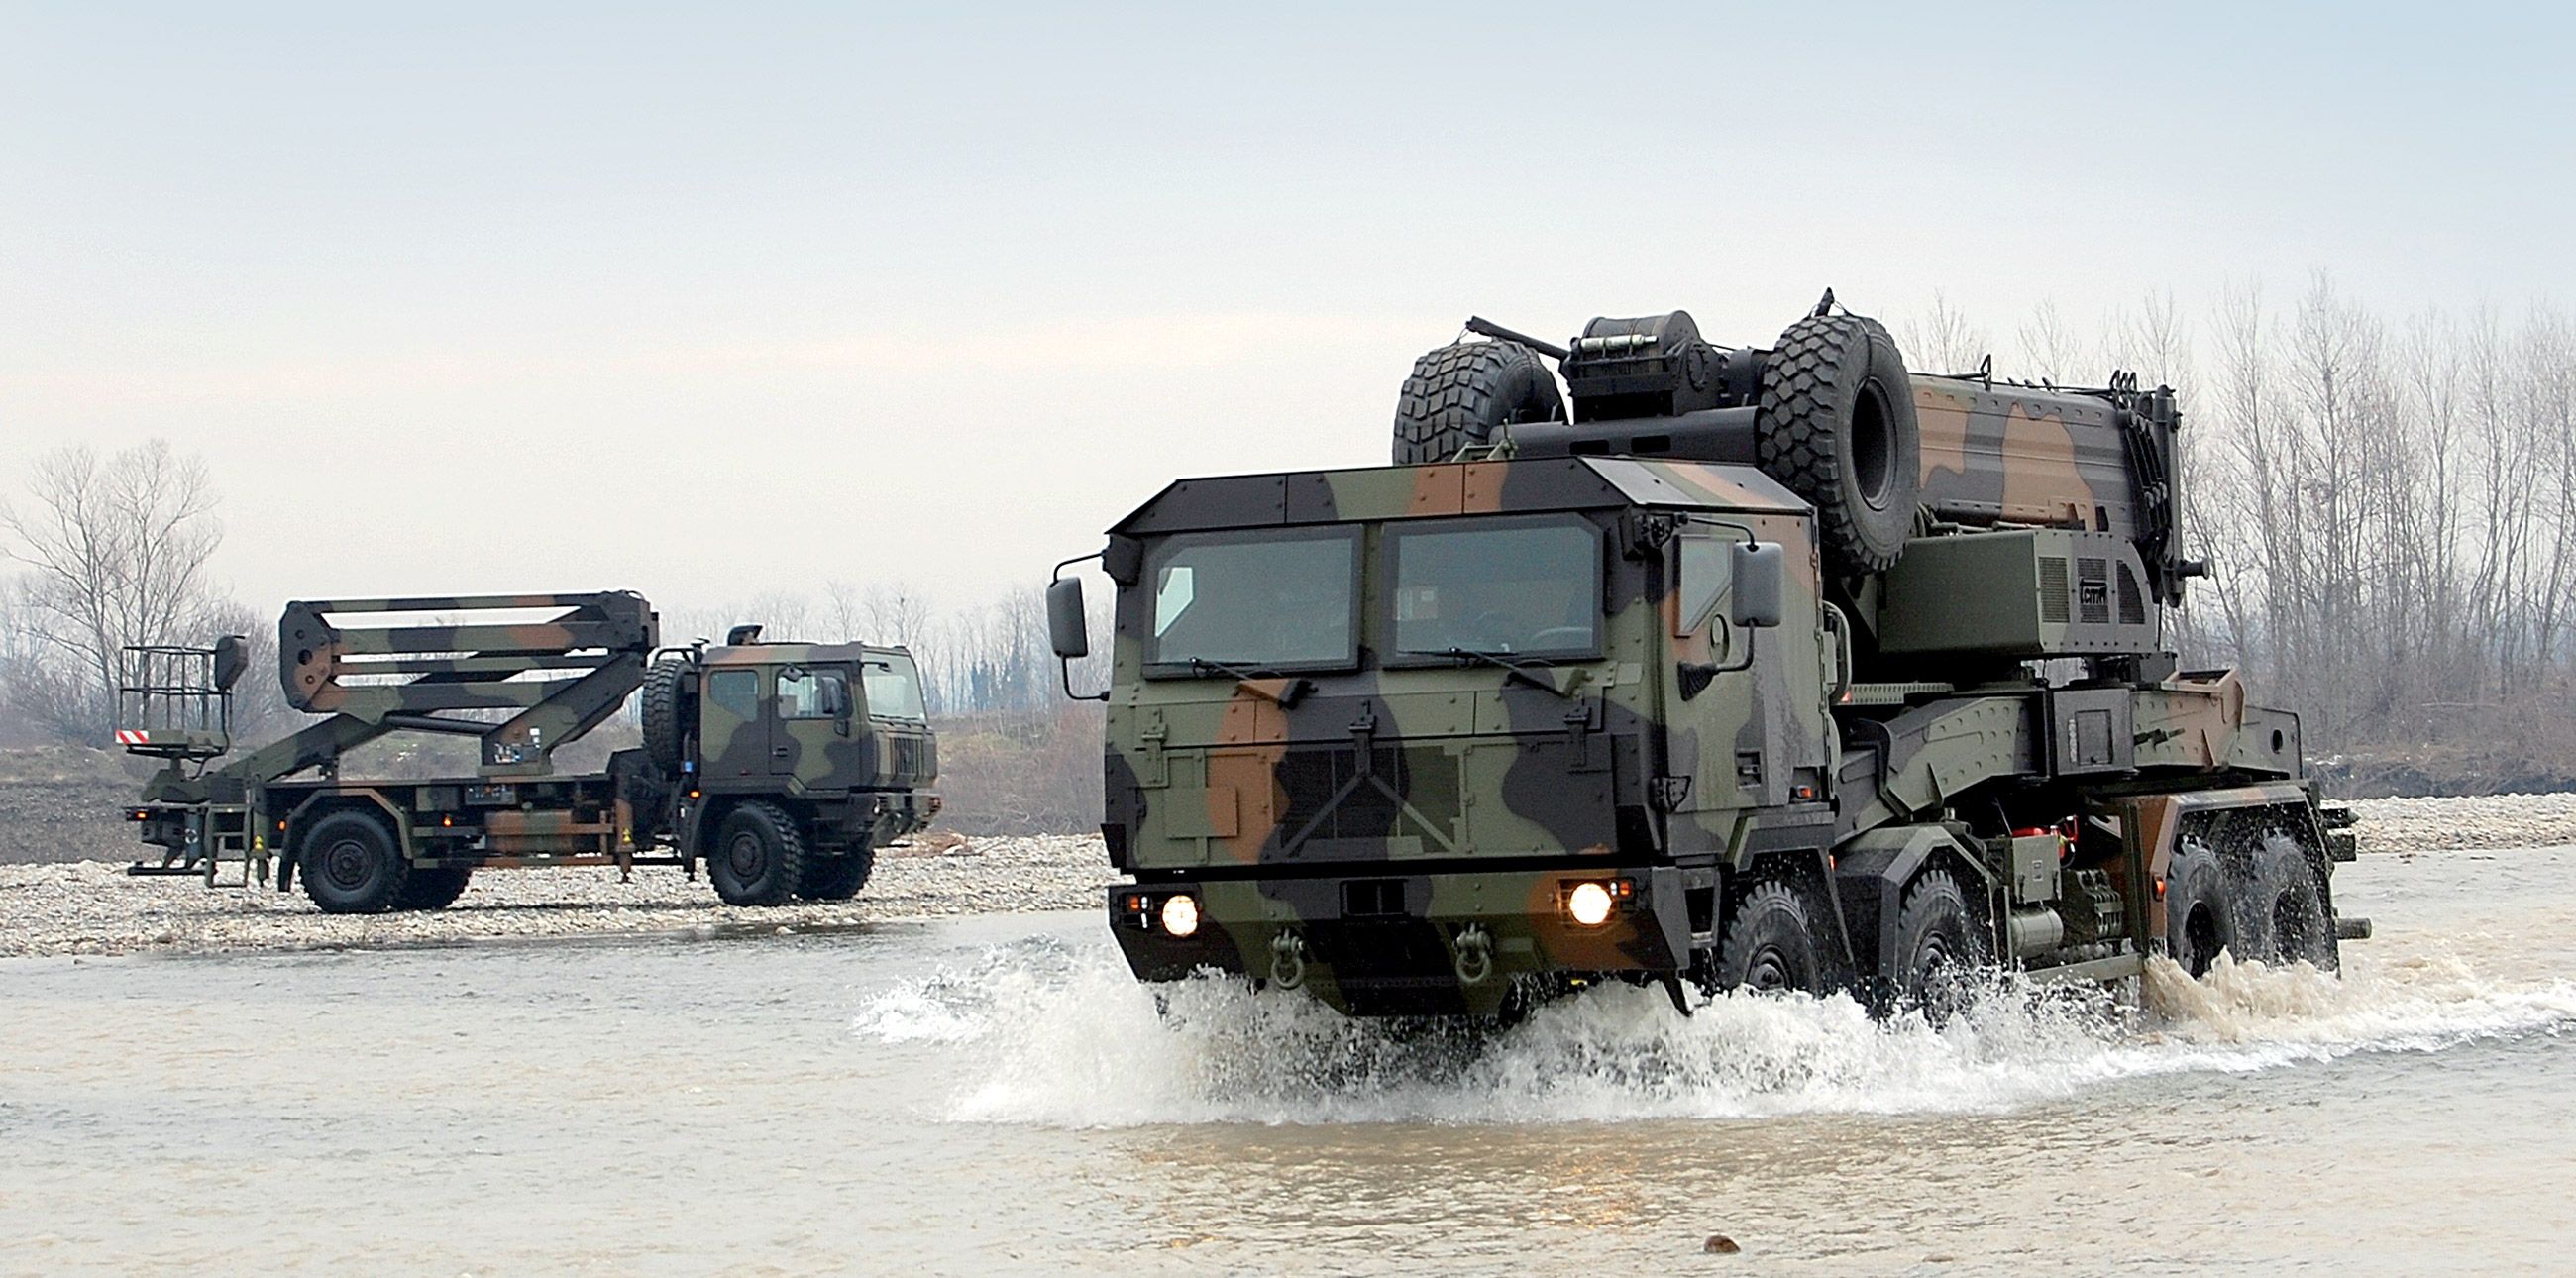 iveco military vehicles